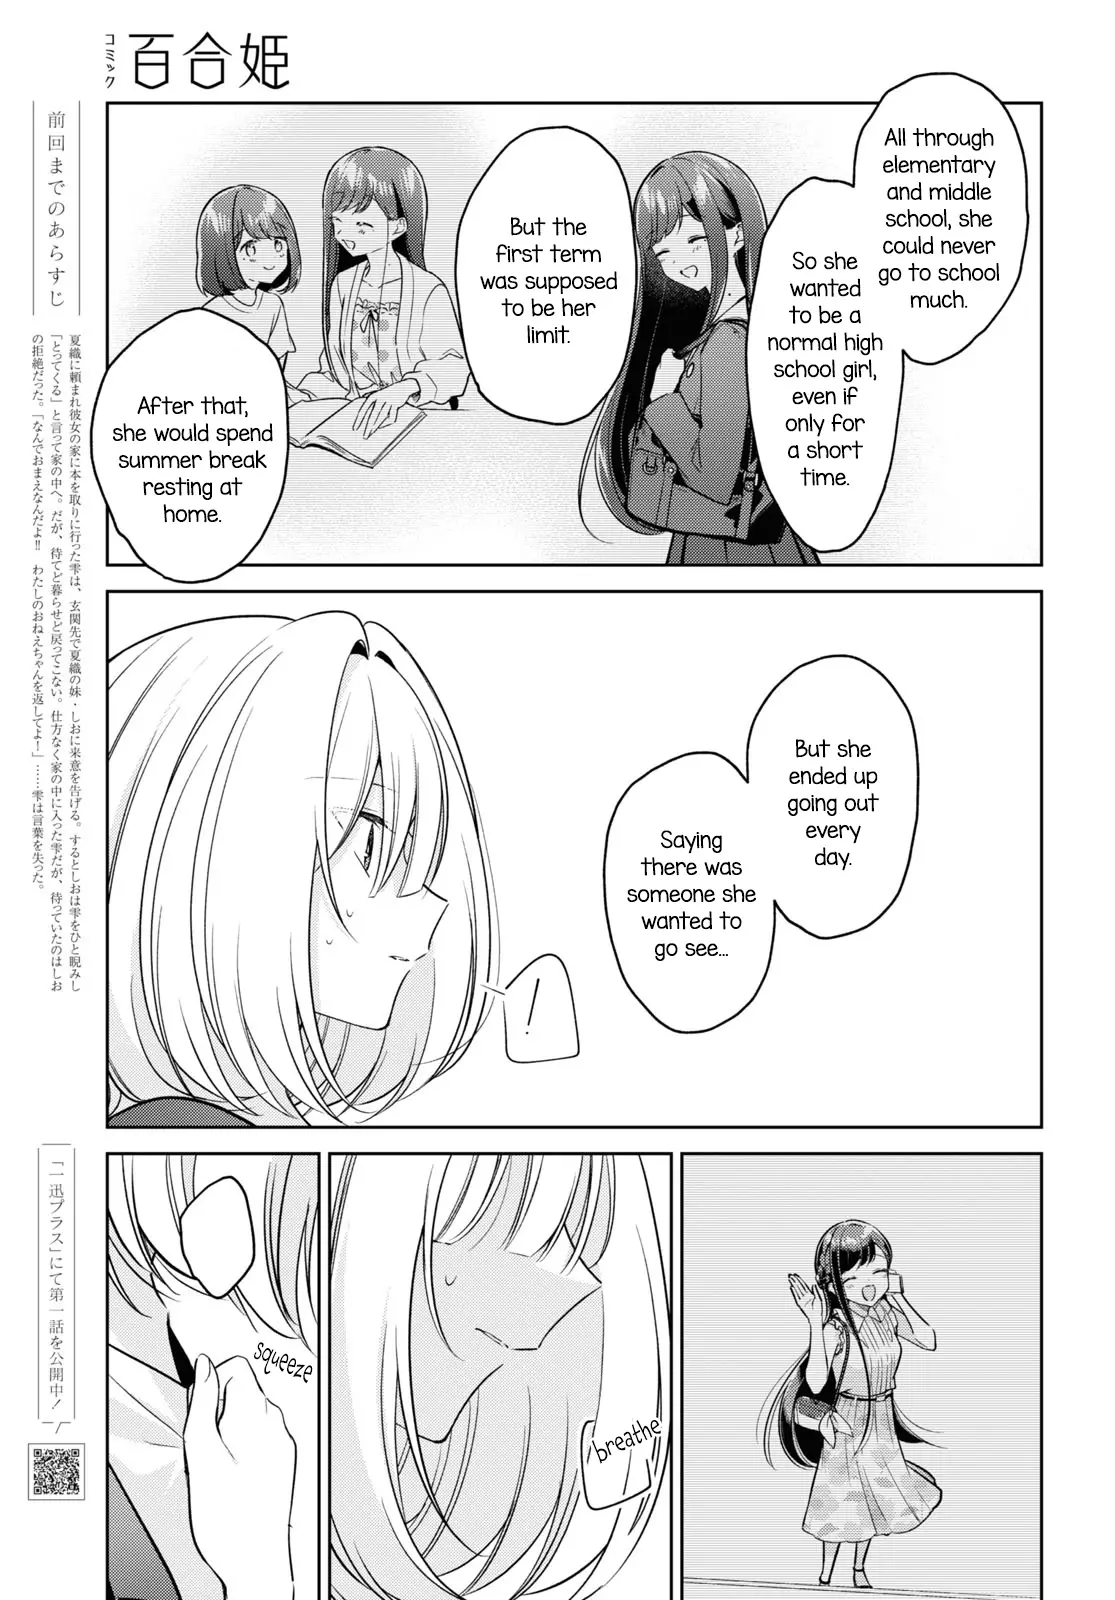 Kimi To Tsuzuru Utakata - 21 page 5-23c147d5